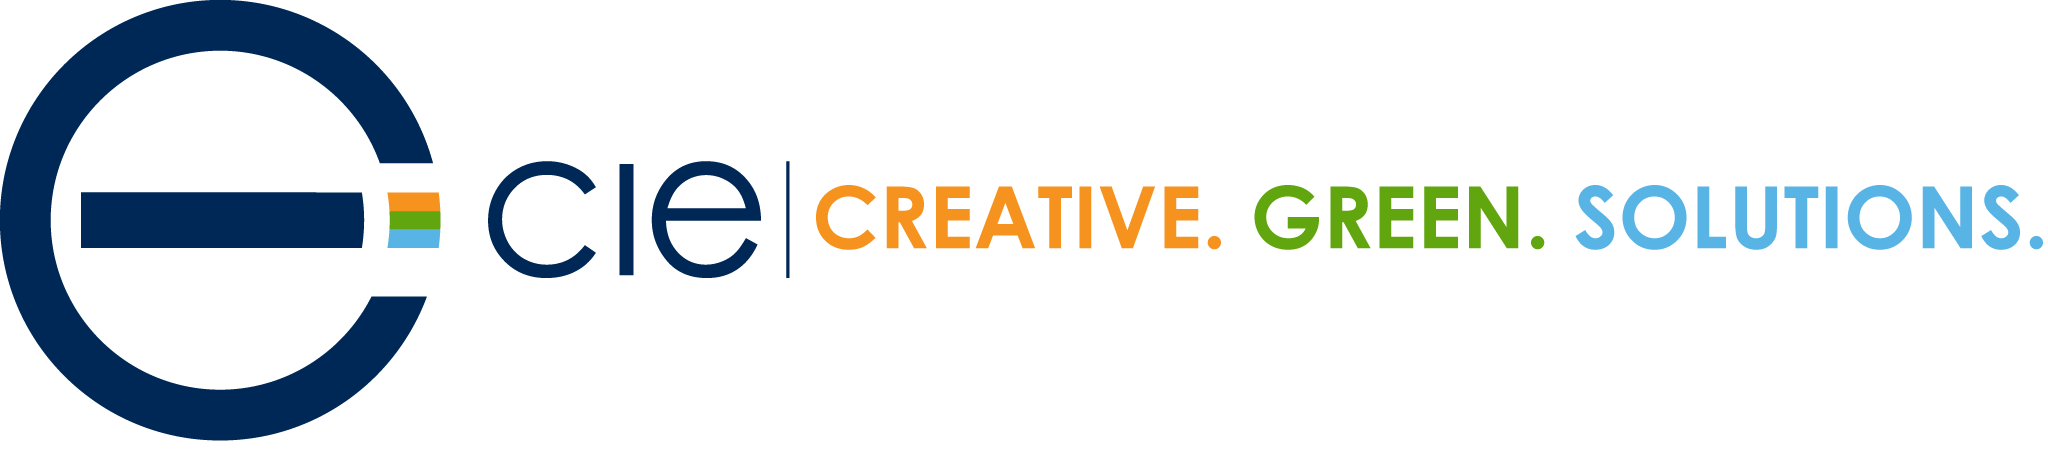 CIE Logo - CIE - Creative Green Solutions